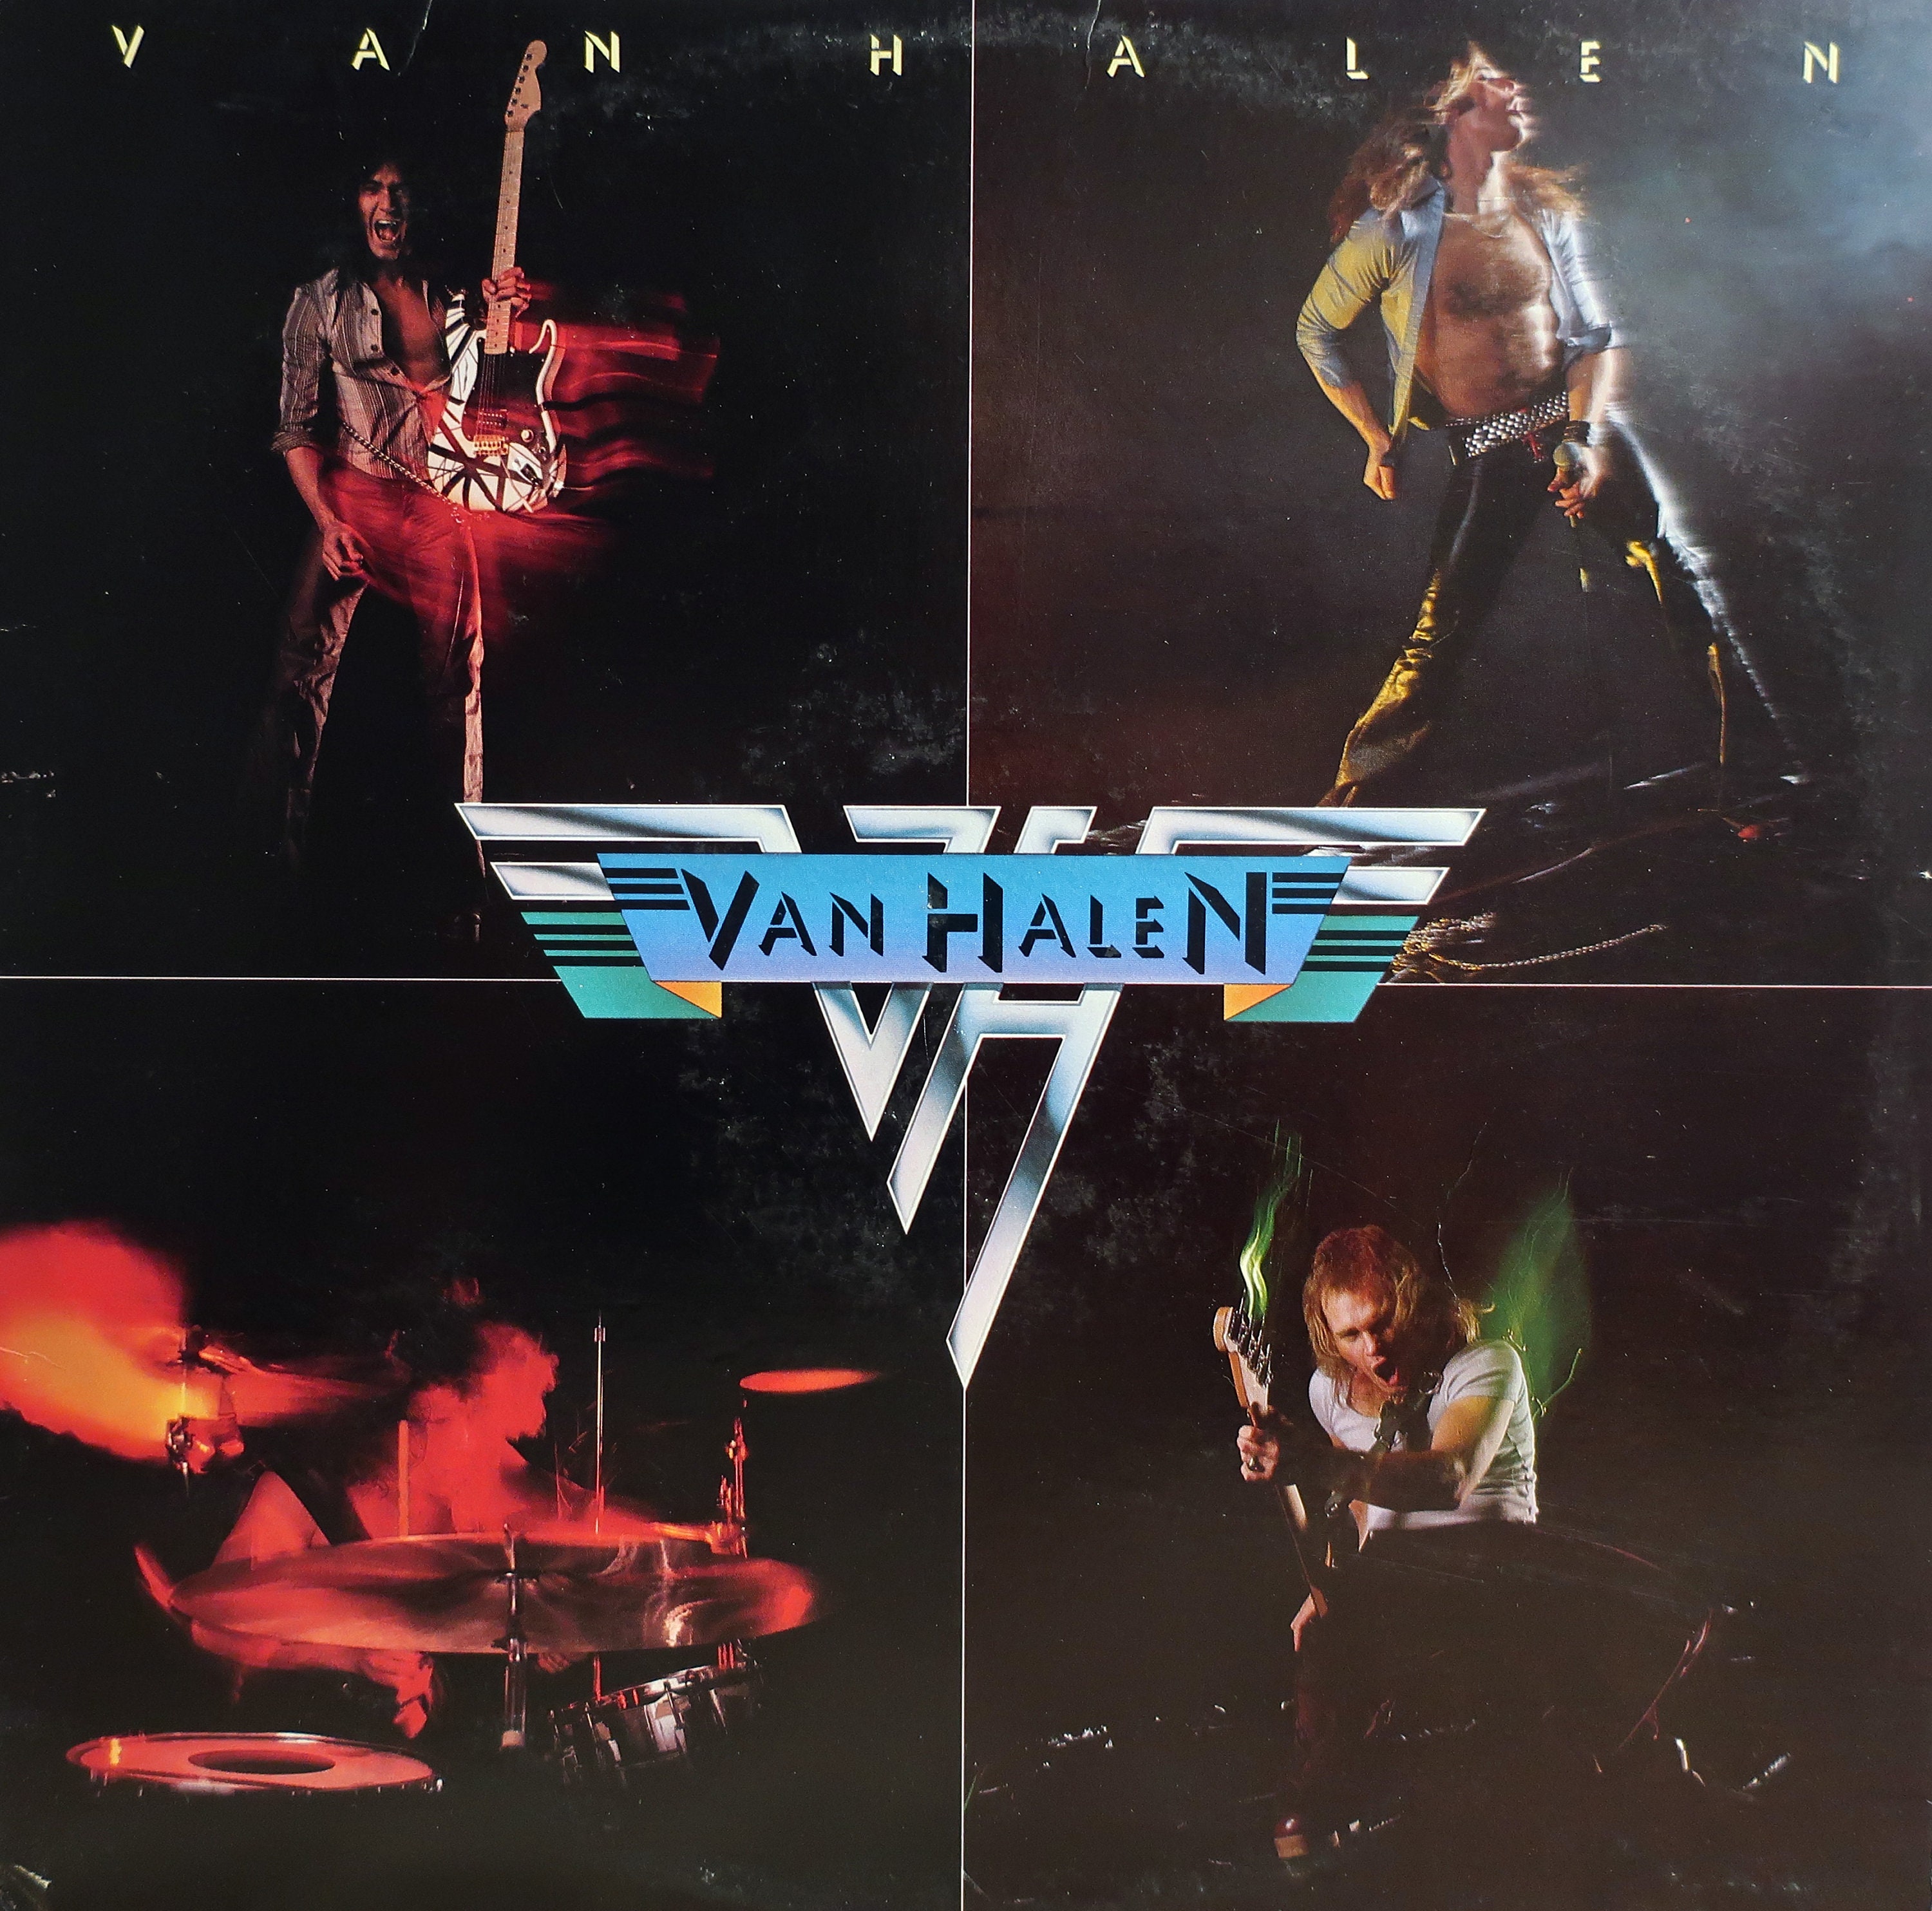 VAN HALEN OU812 ORIGINAL PRESSING VINYL LP SEALED RARE Sammy Hagar 